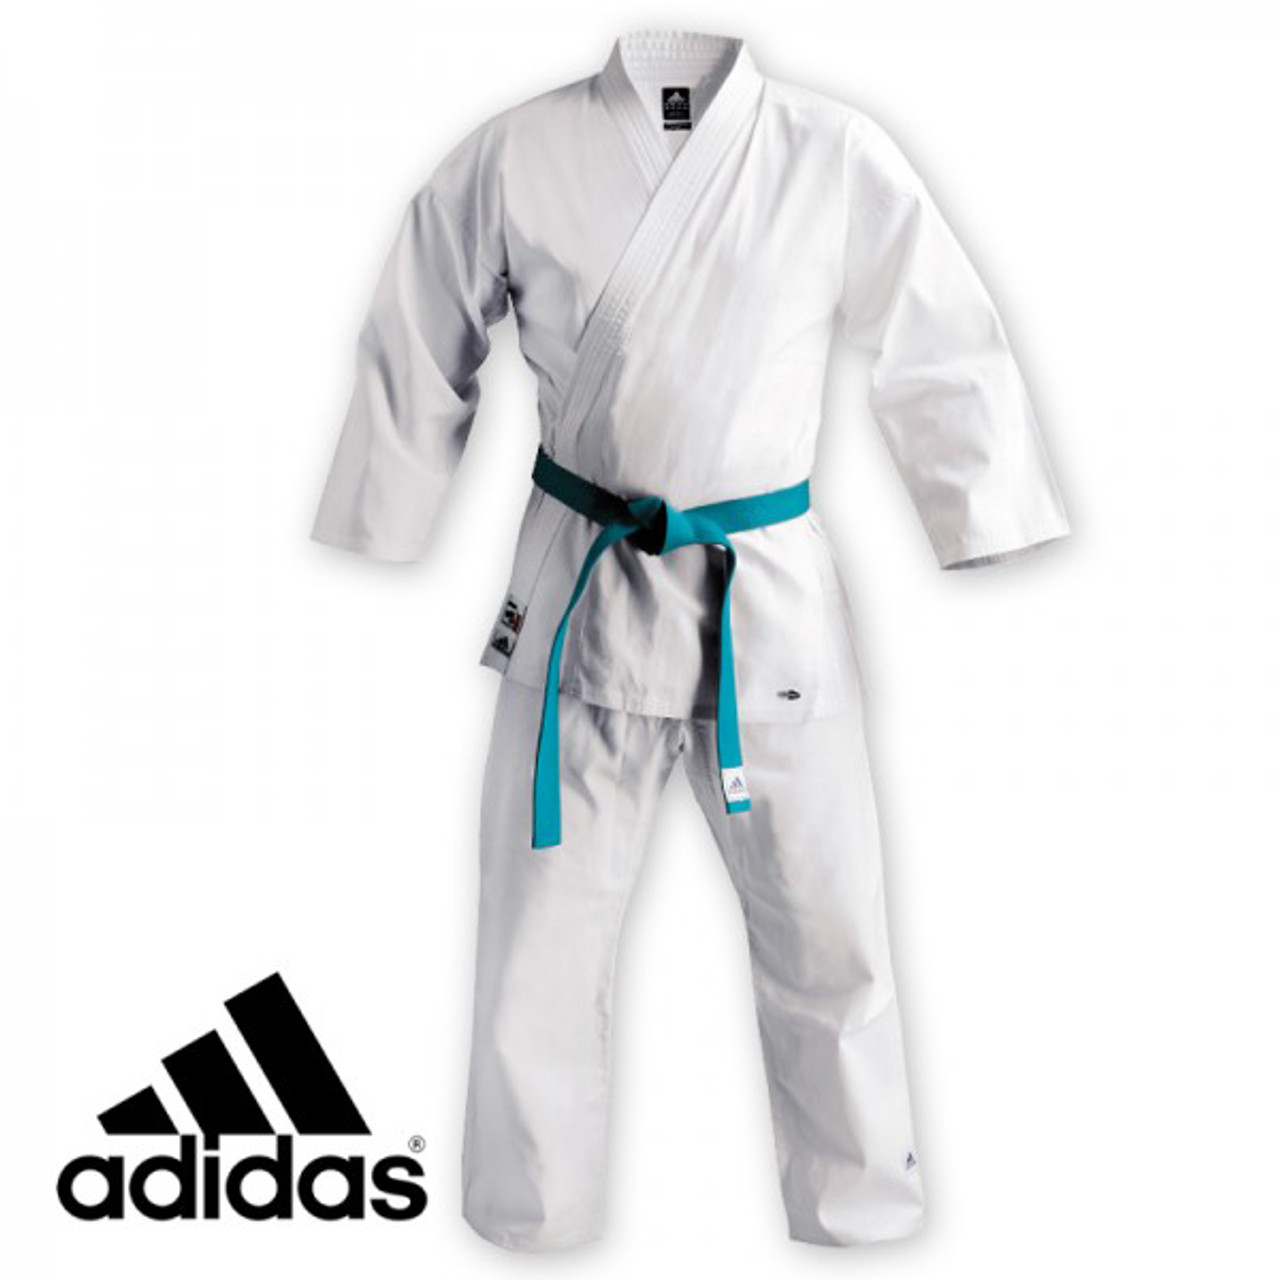 adidas karate uniform